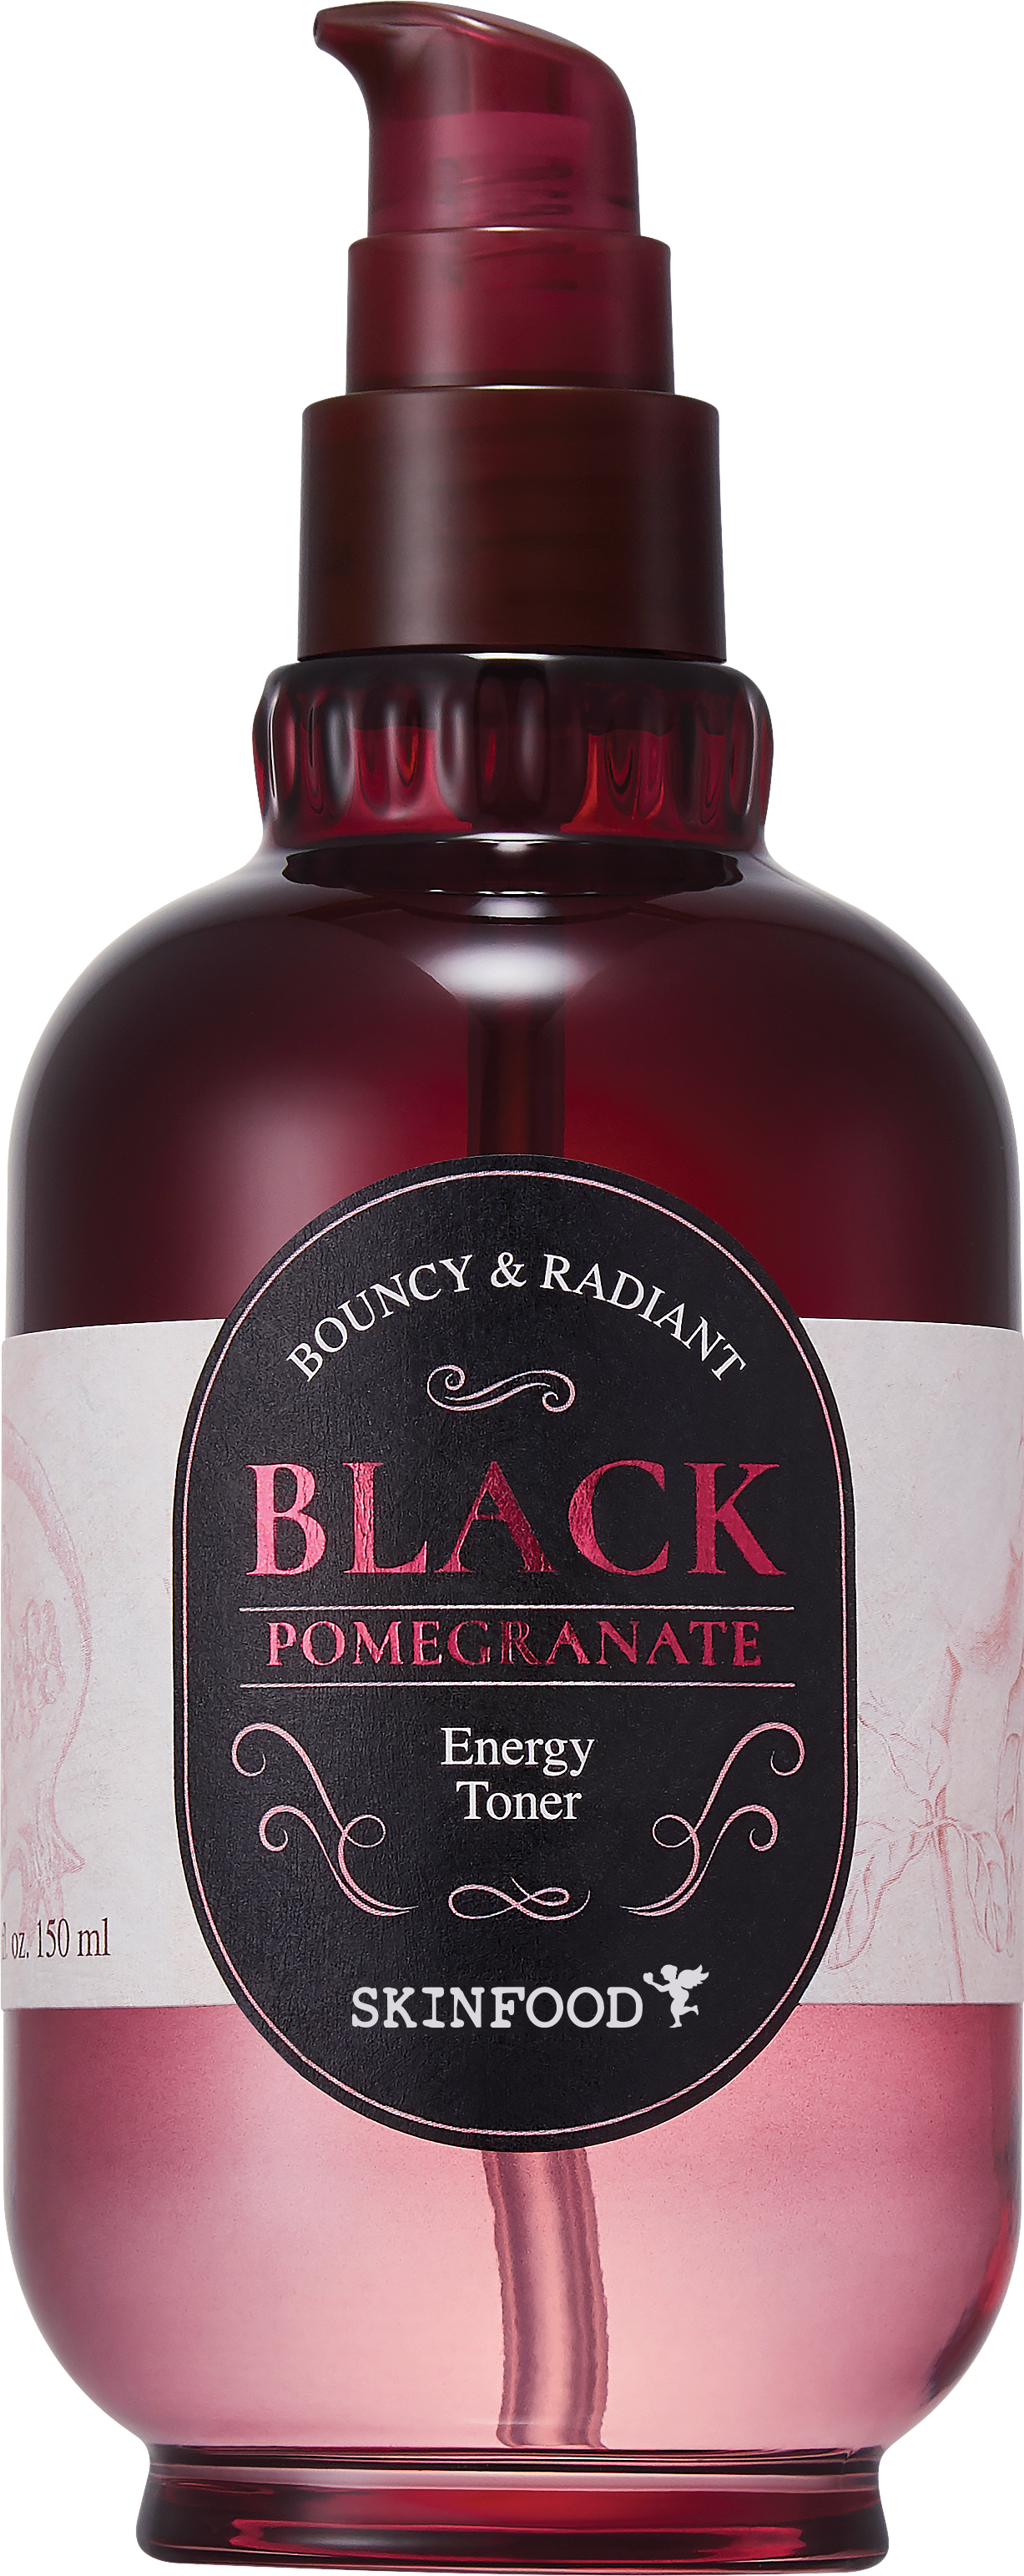 SF70206 - Black Pomegranate Energy Toner